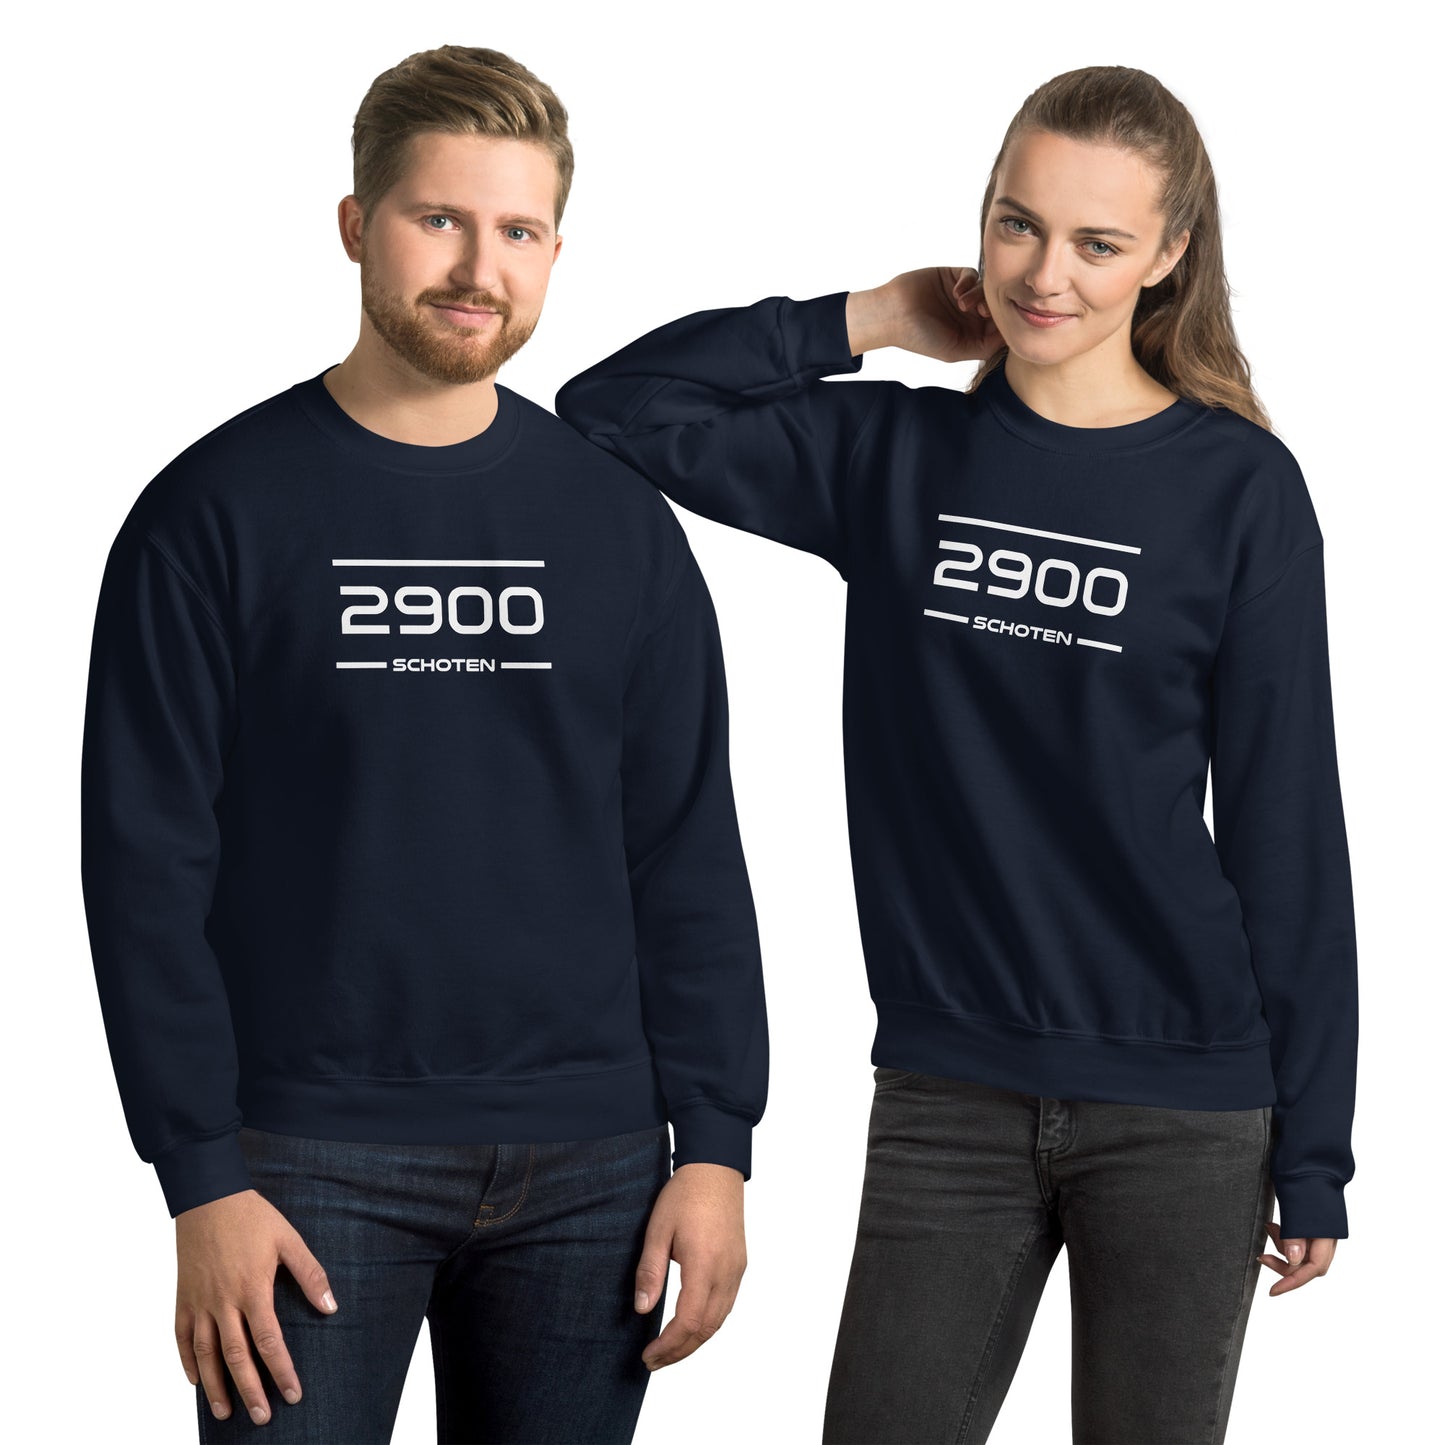 Sweater - 2900 - Schoten (M/V)